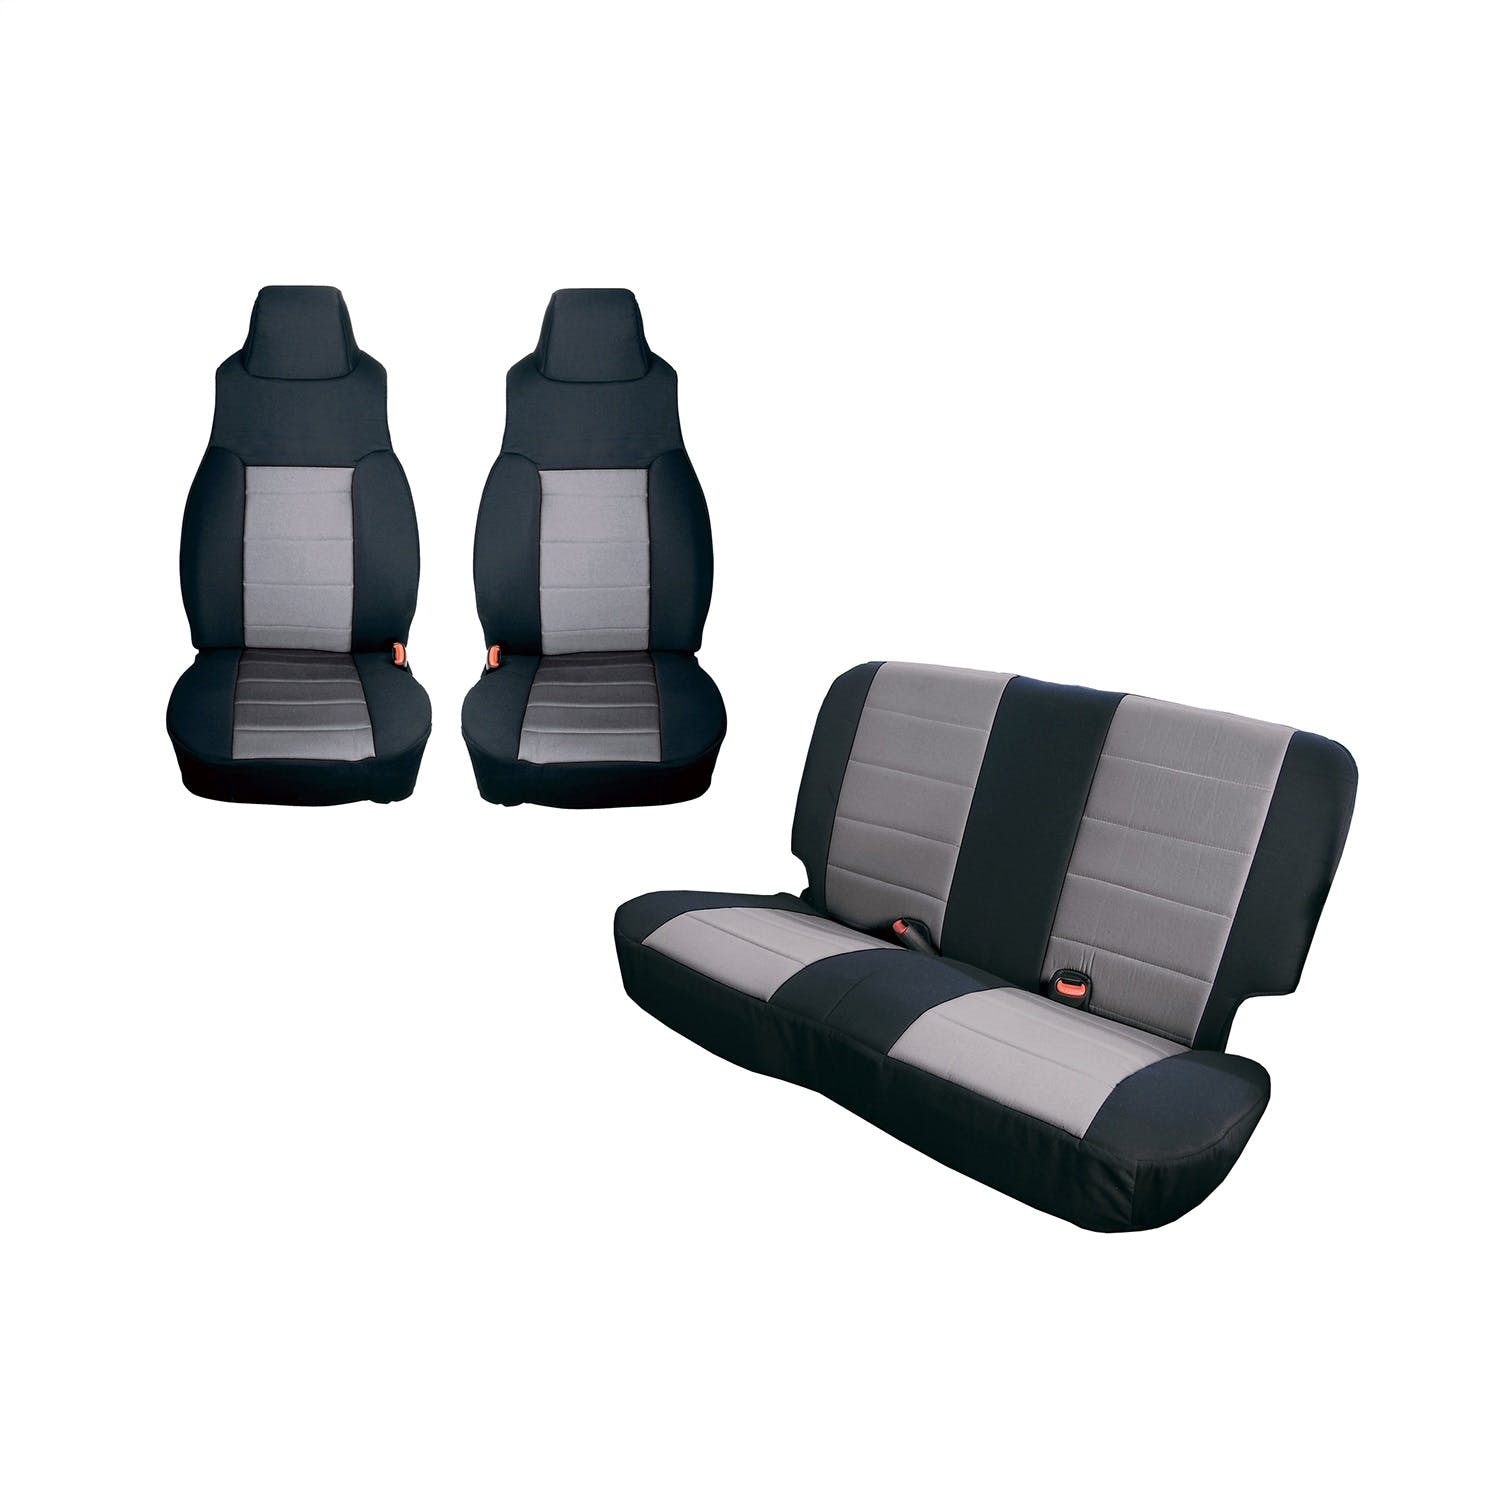 Rugged Ridge 13291.09 Seat Cover Kit, Black/Gray